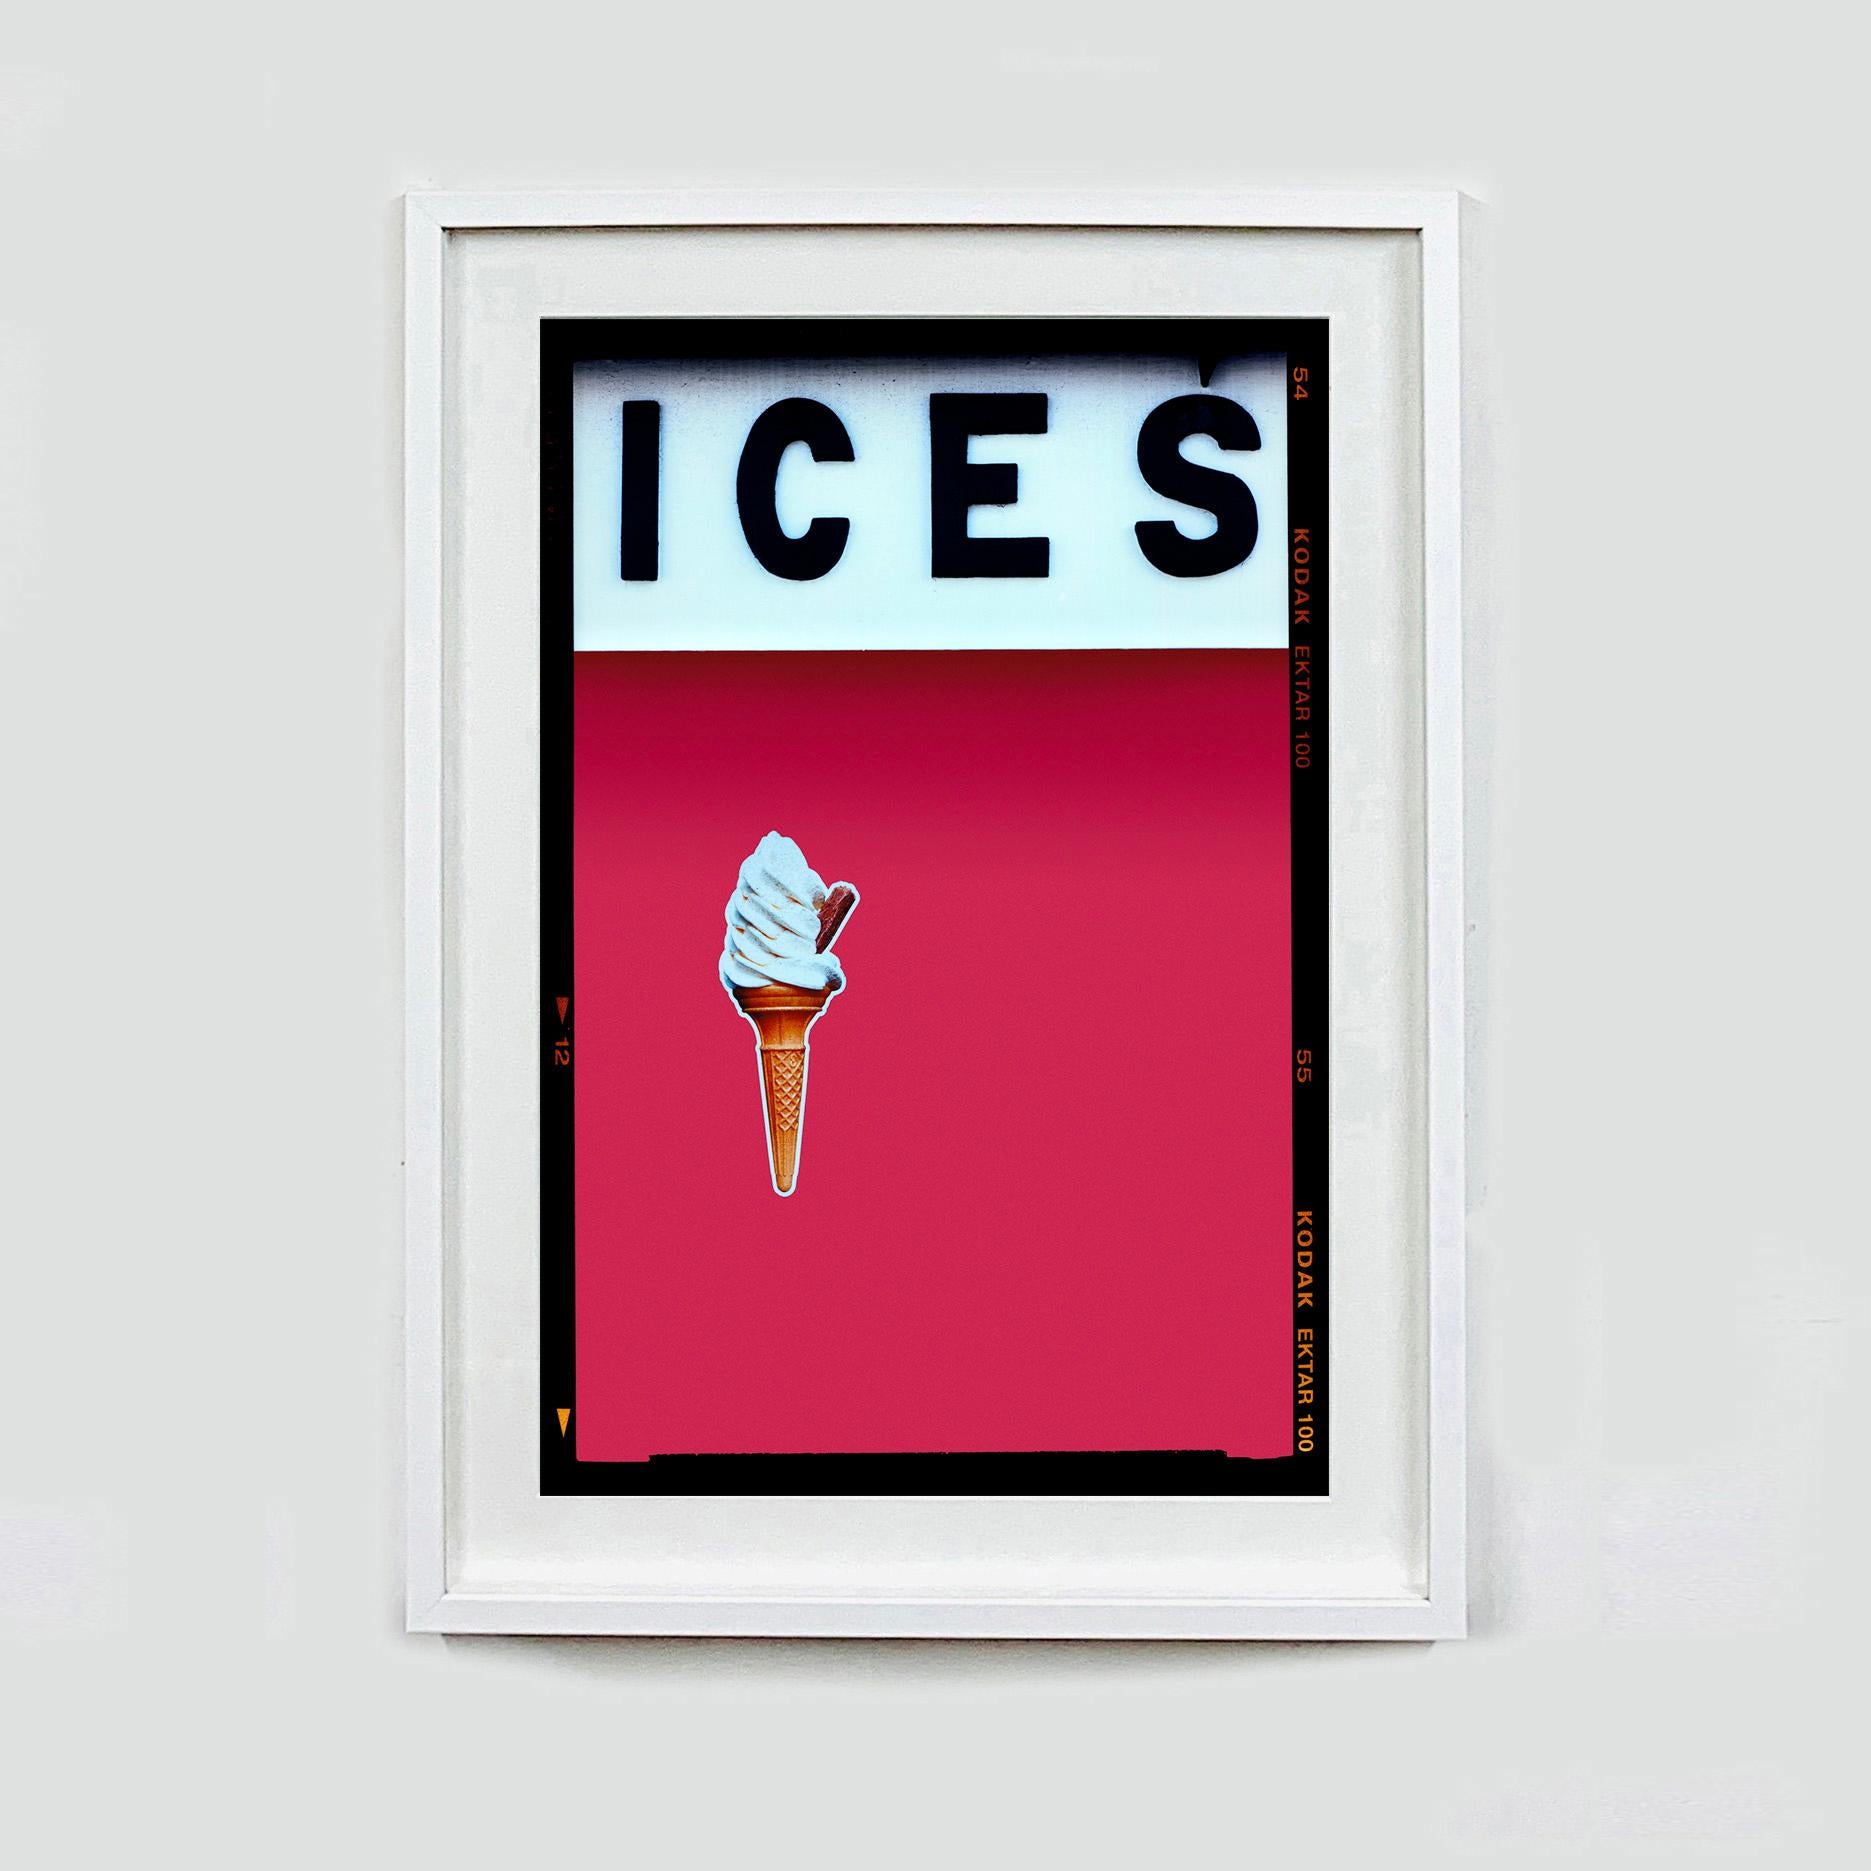 ICES - Four Framed Artworks - Pop Art Color Photography For Sale 5